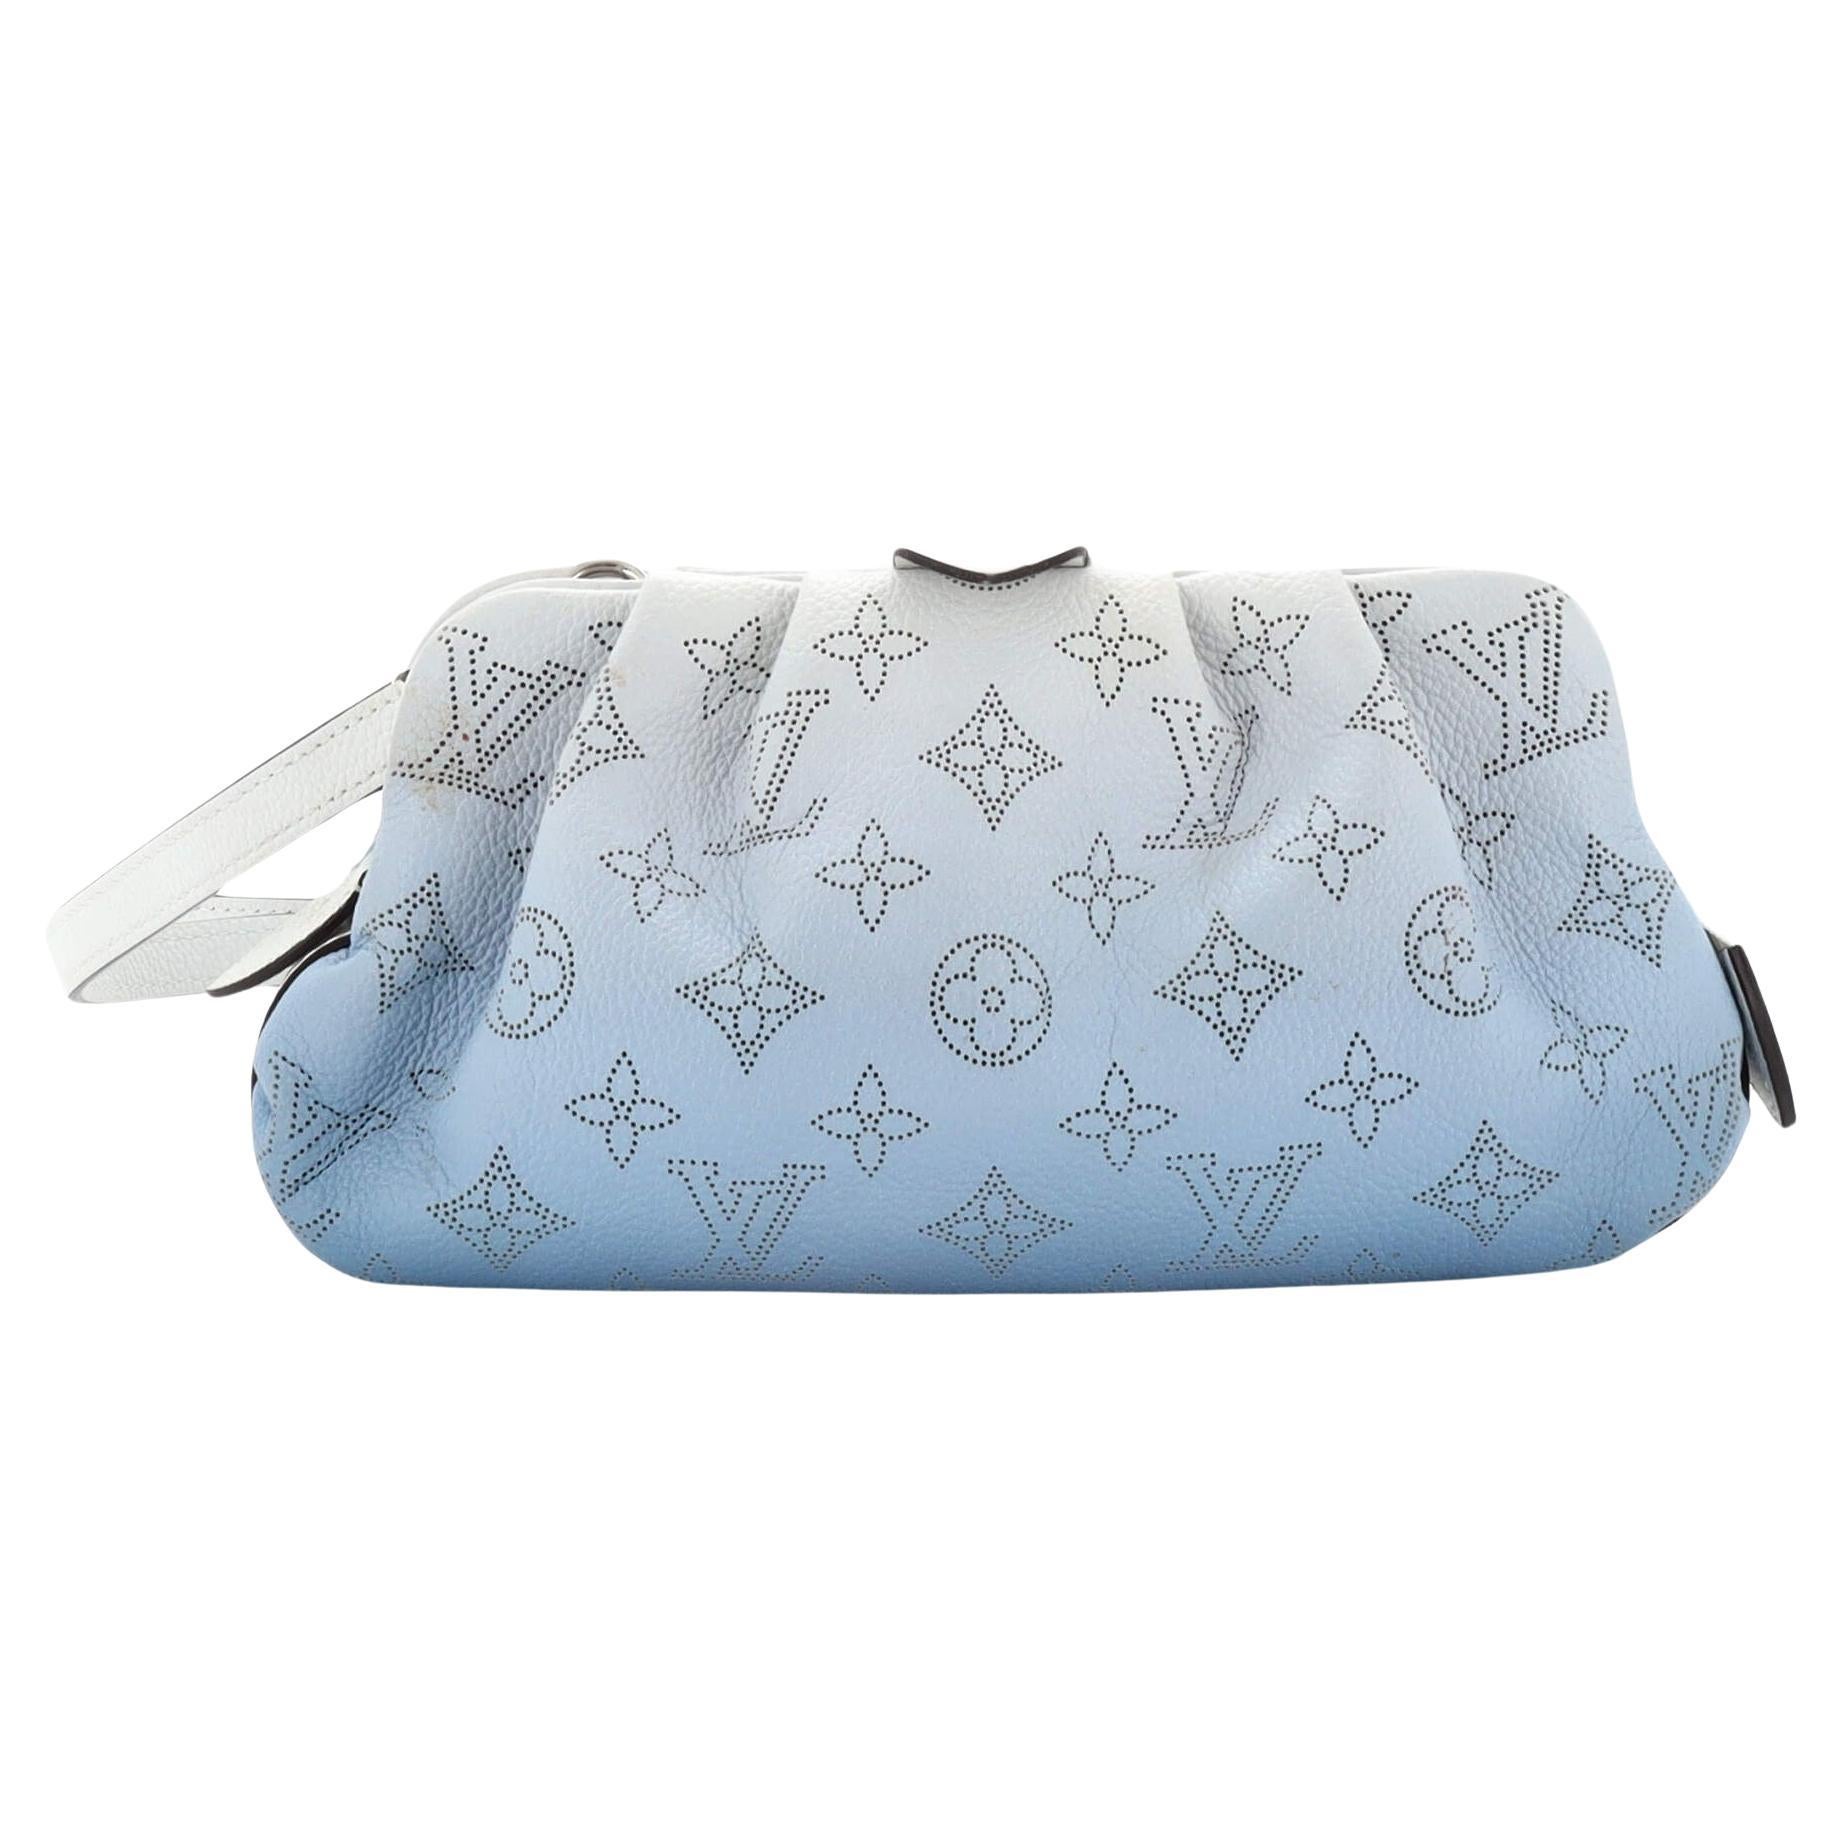 Sold at Auction: A Louis Vuitton Scala cross body mini pouch bag